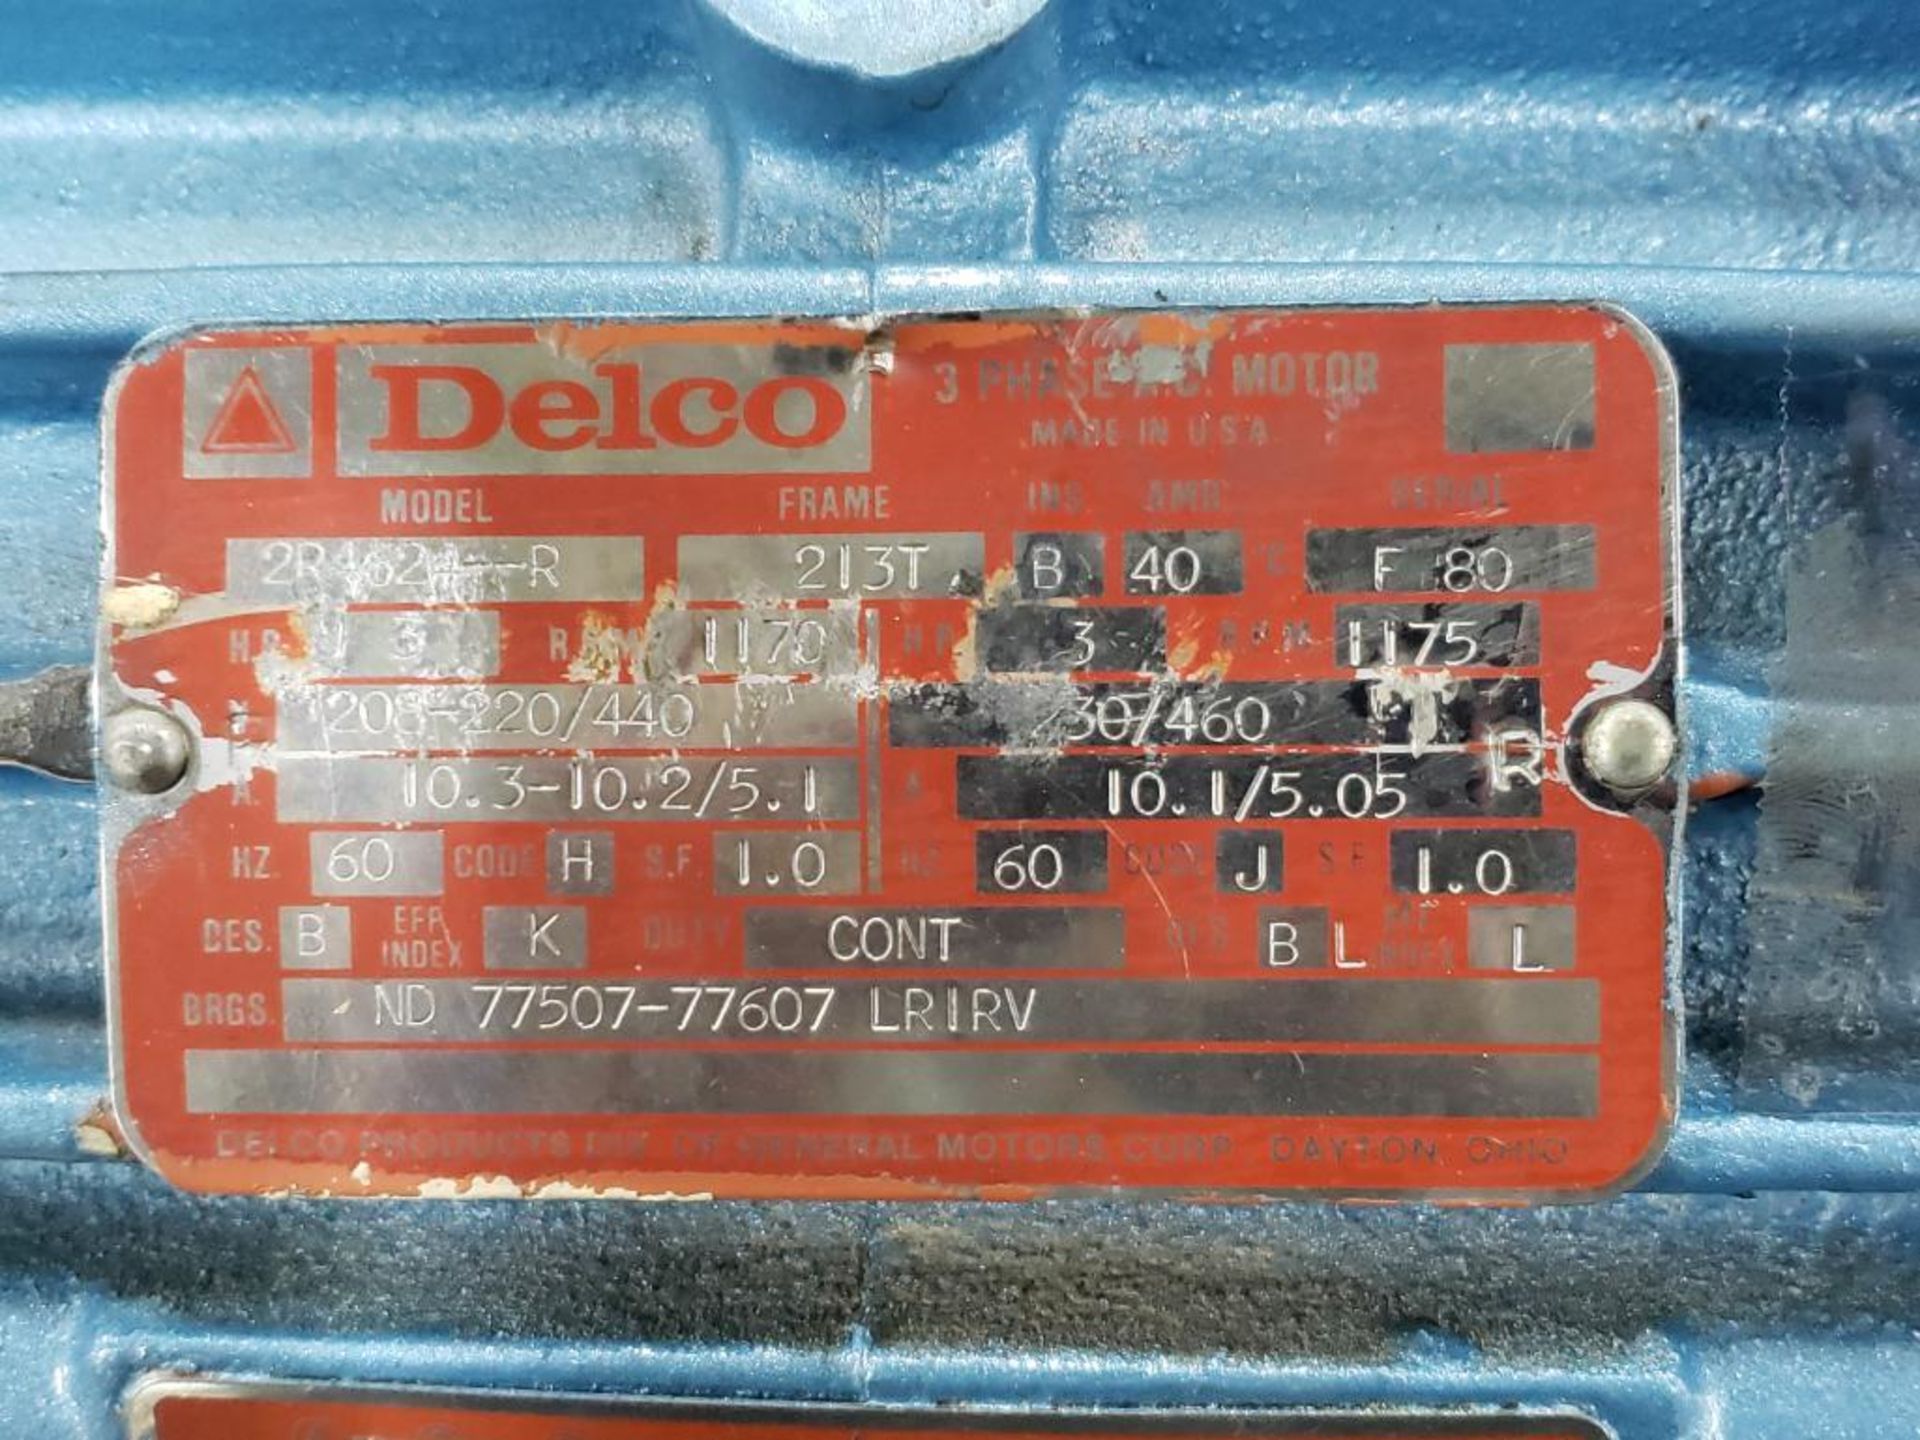 3hp Delco motor model 2R4624-R, 208-220/440v, 1170rpm, 213T frame. - Bild 4 aus 4